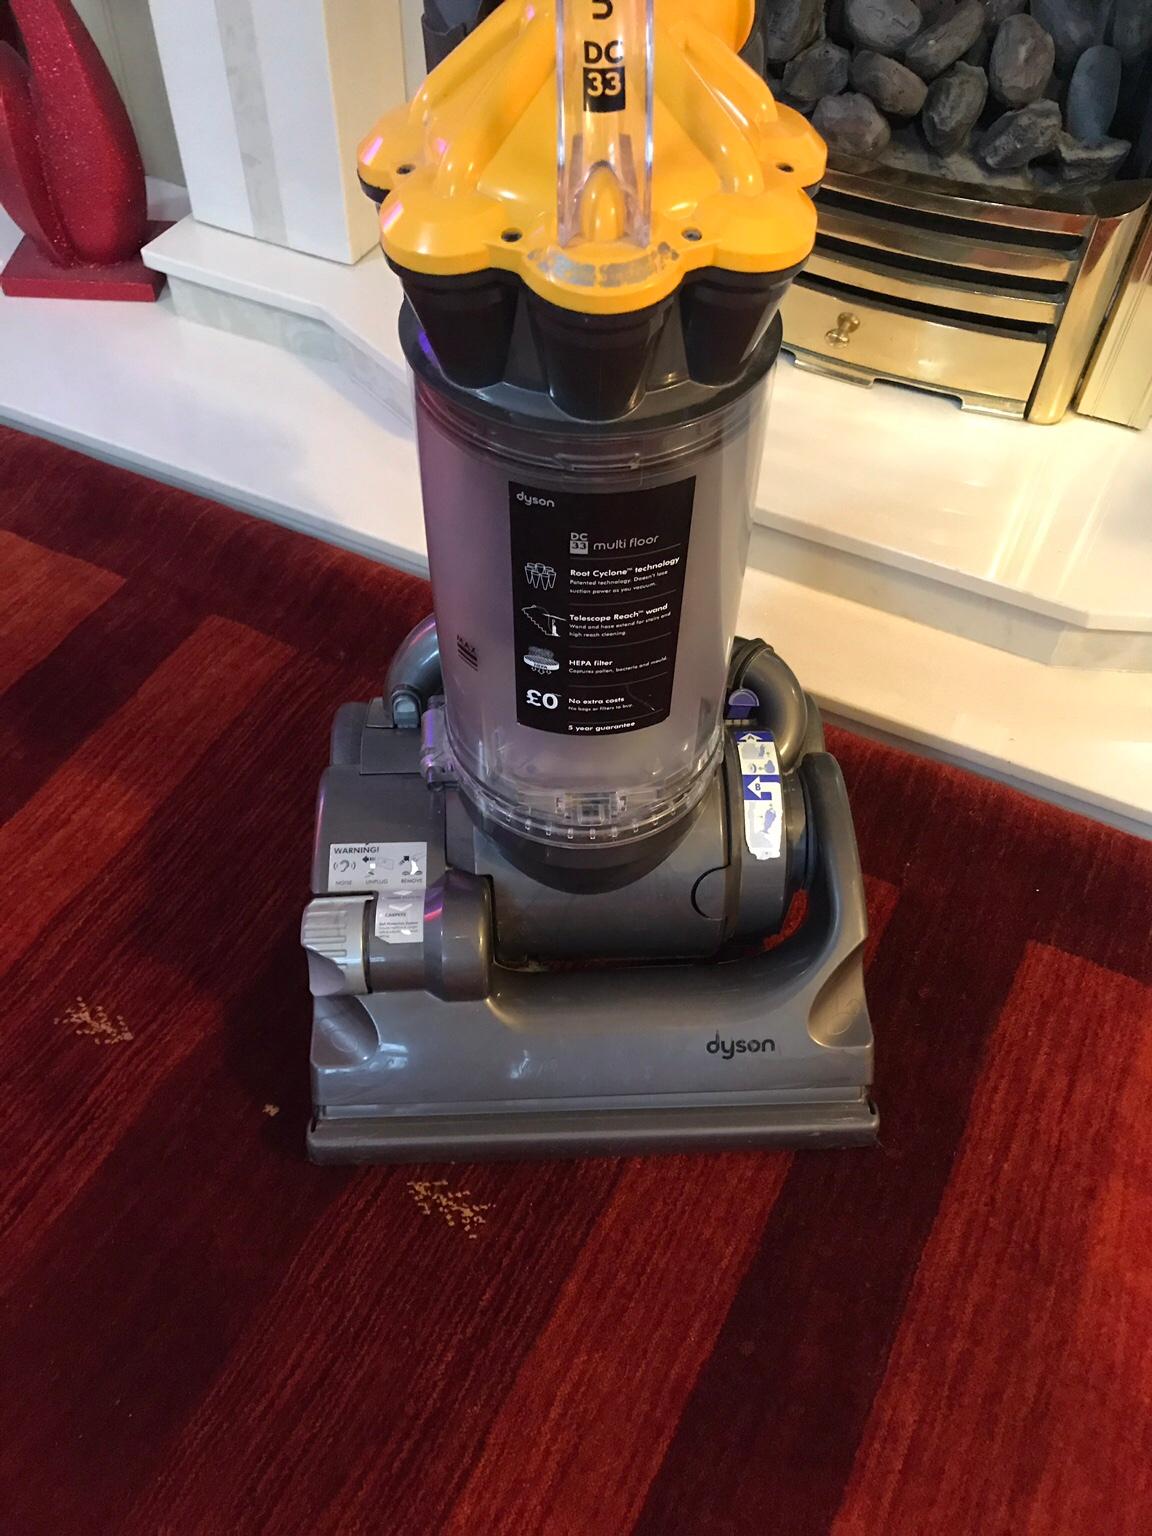 Dyson Dc 33 Multi Floor Vacuum With Warranty In B47 Bromsgrove Fur